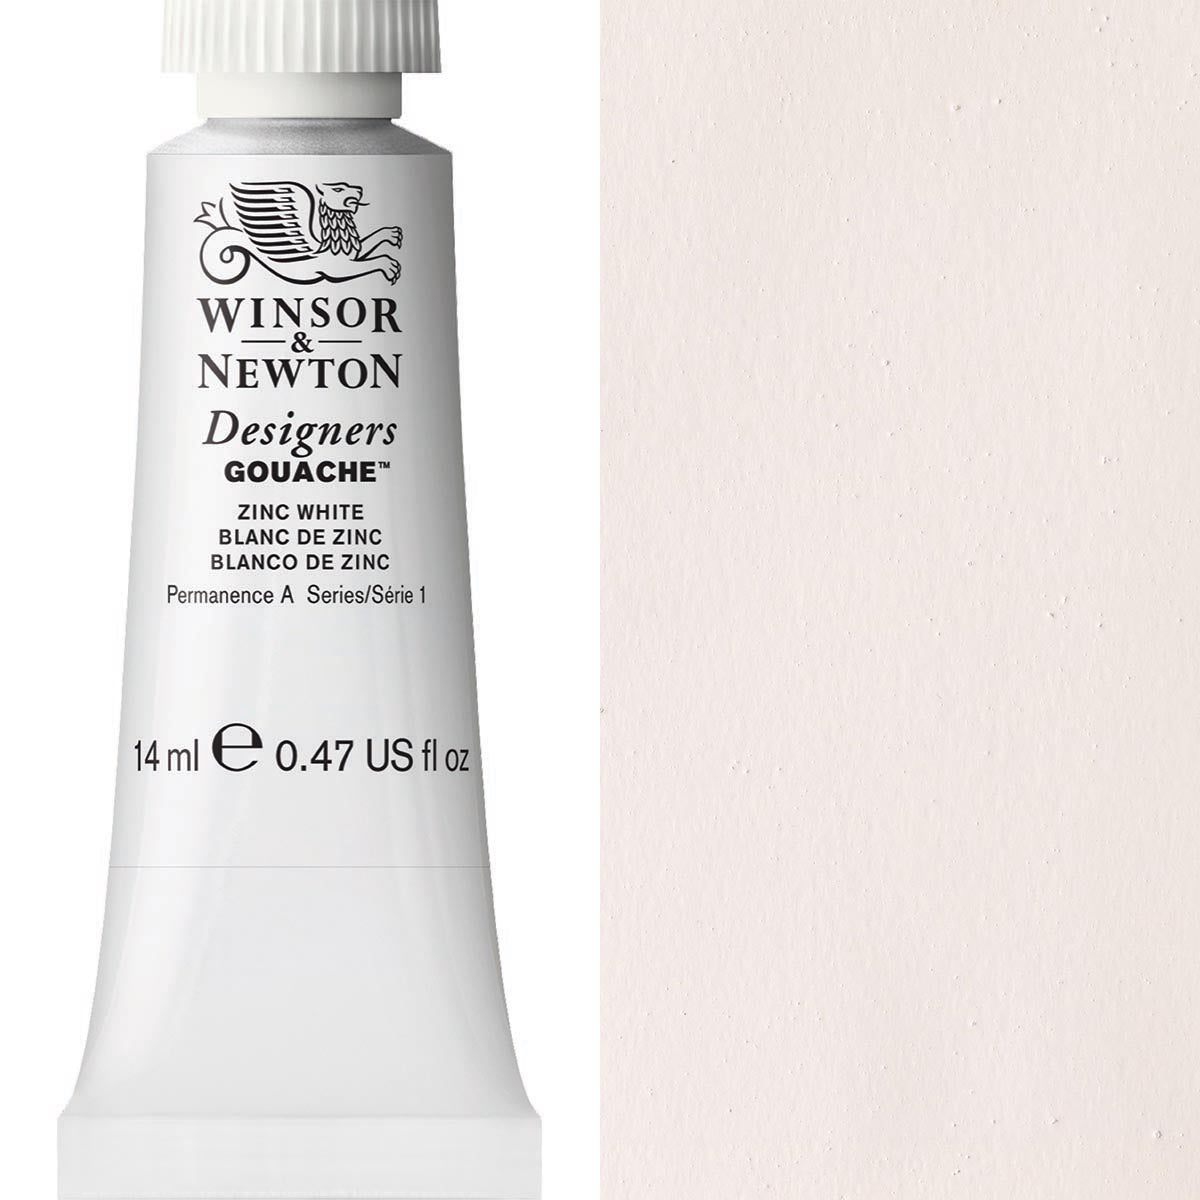 Winsor and Newton - Designers Gouache - 14ml - Zinc White